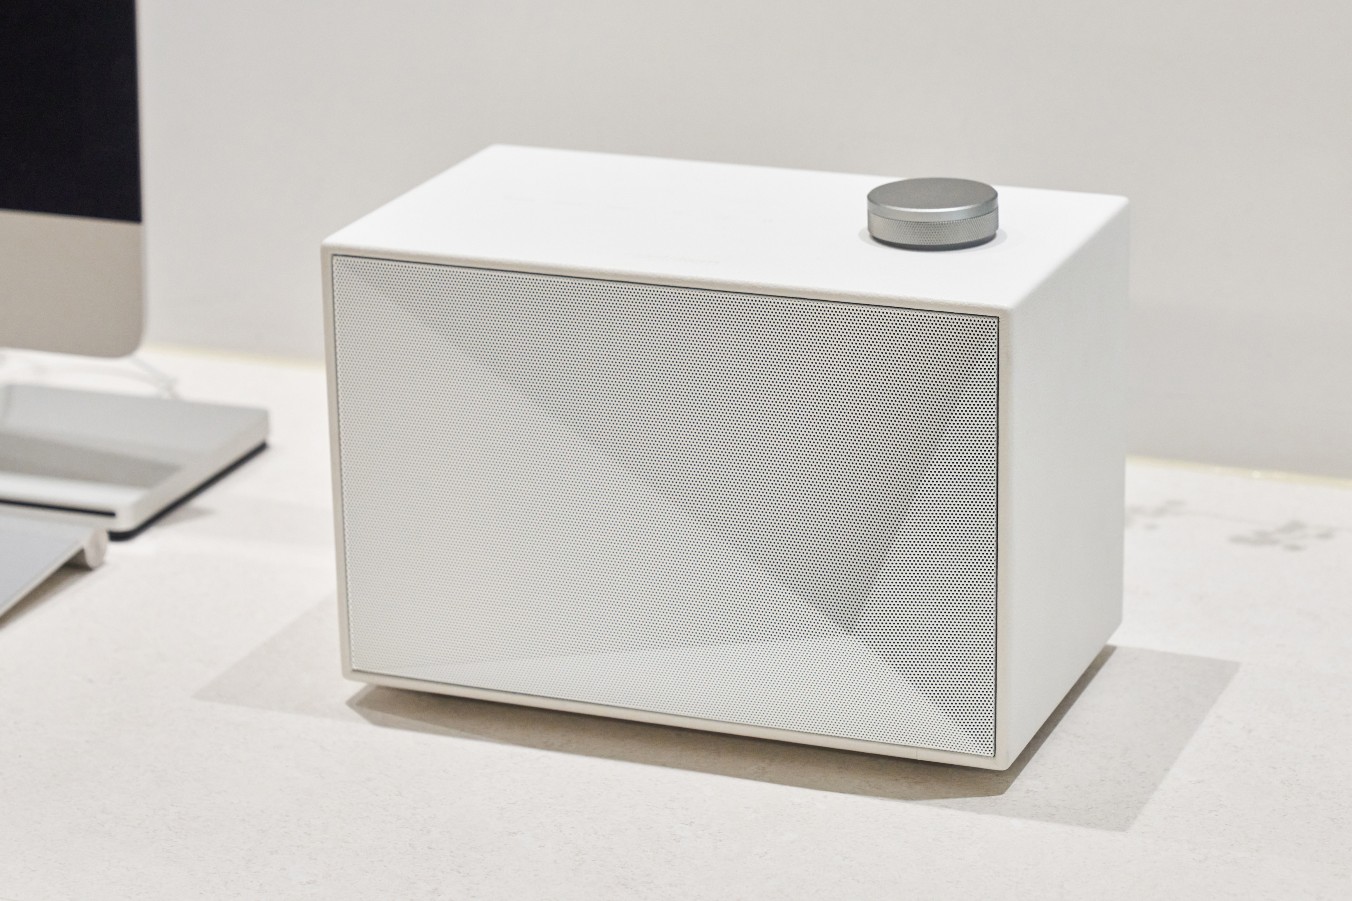 Astell & Kern's first BT speaker offers hi-fi sound for $499